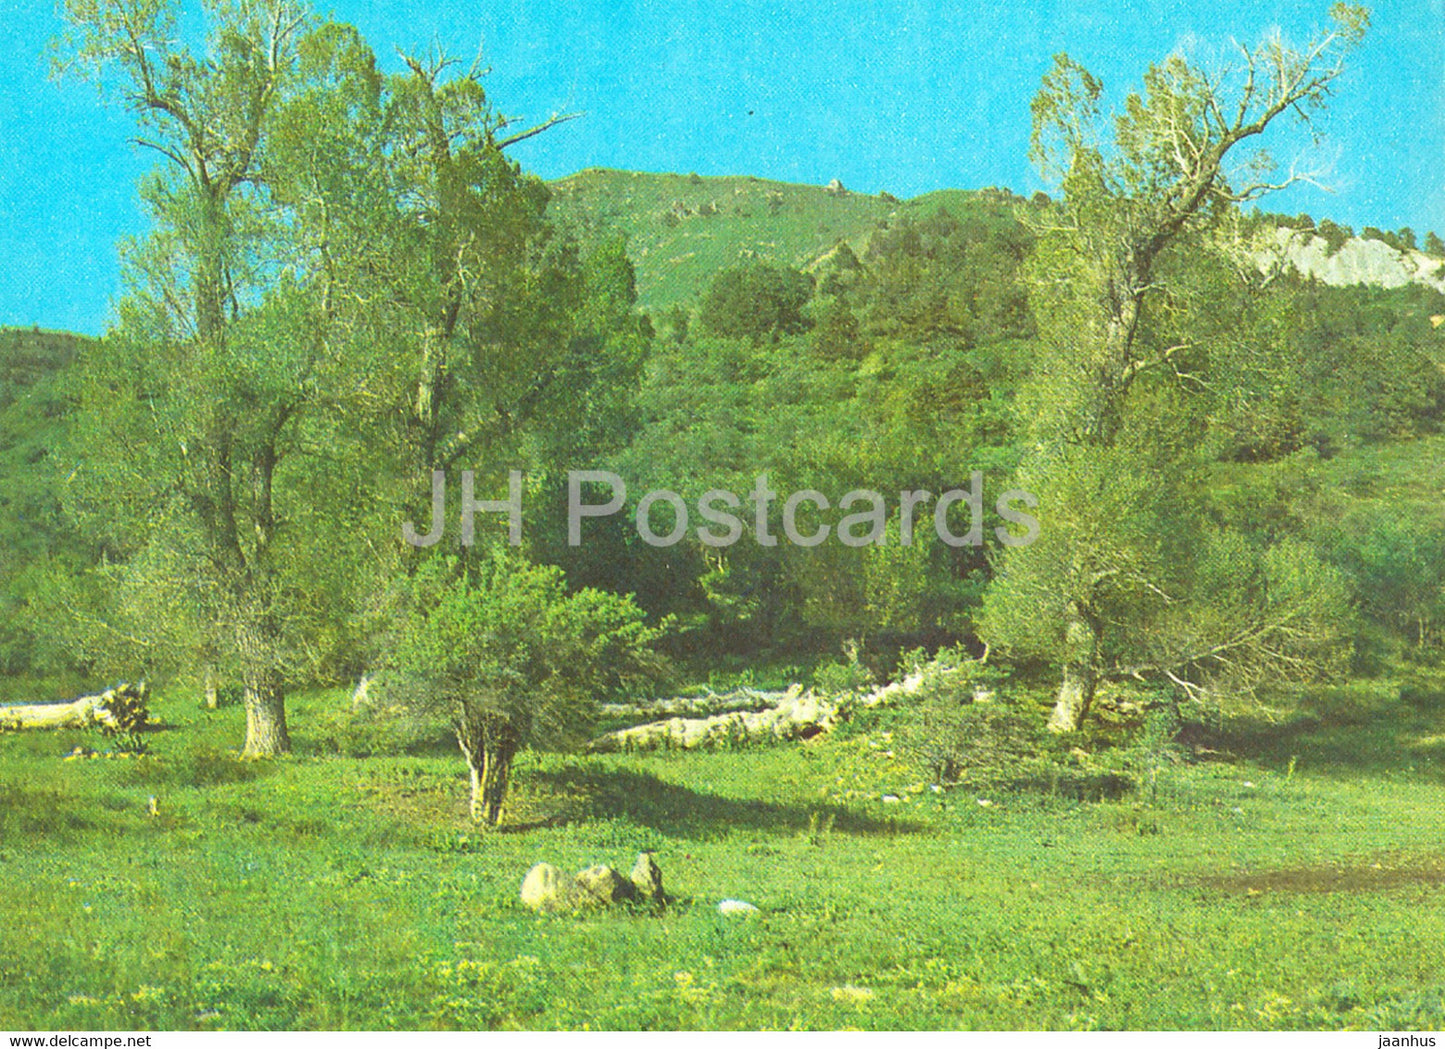 poplar grove - Nature Trails - 1981 - Uzbekistan USSR - unused - JH Postcards